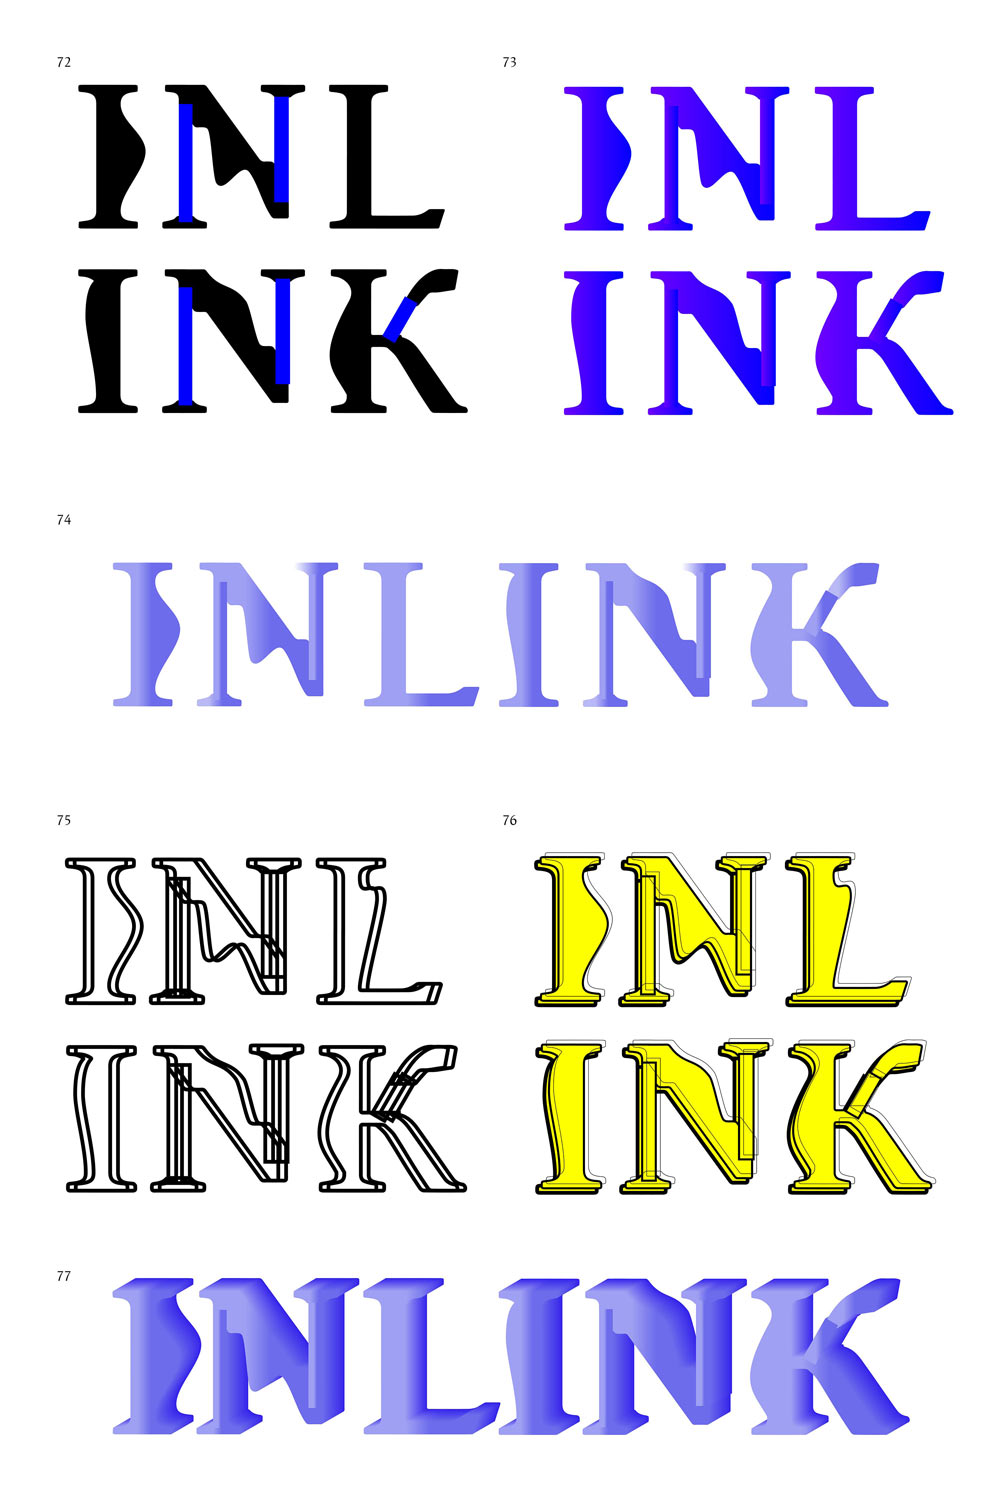 inlink process 06